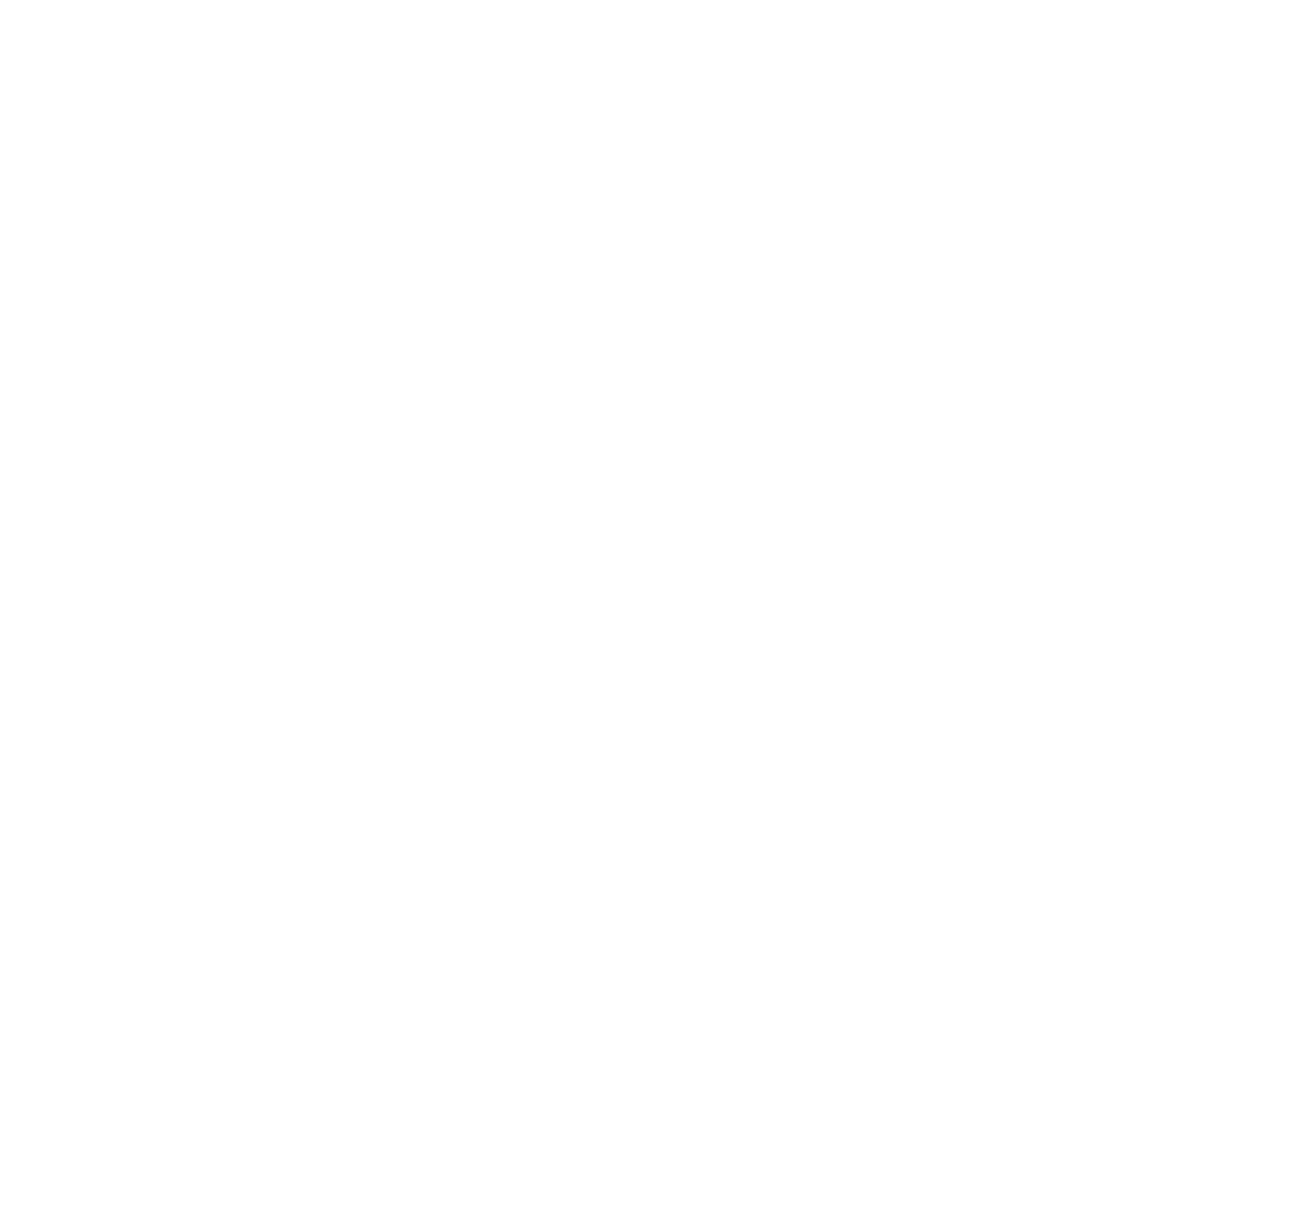 Gloria Witt For Congress